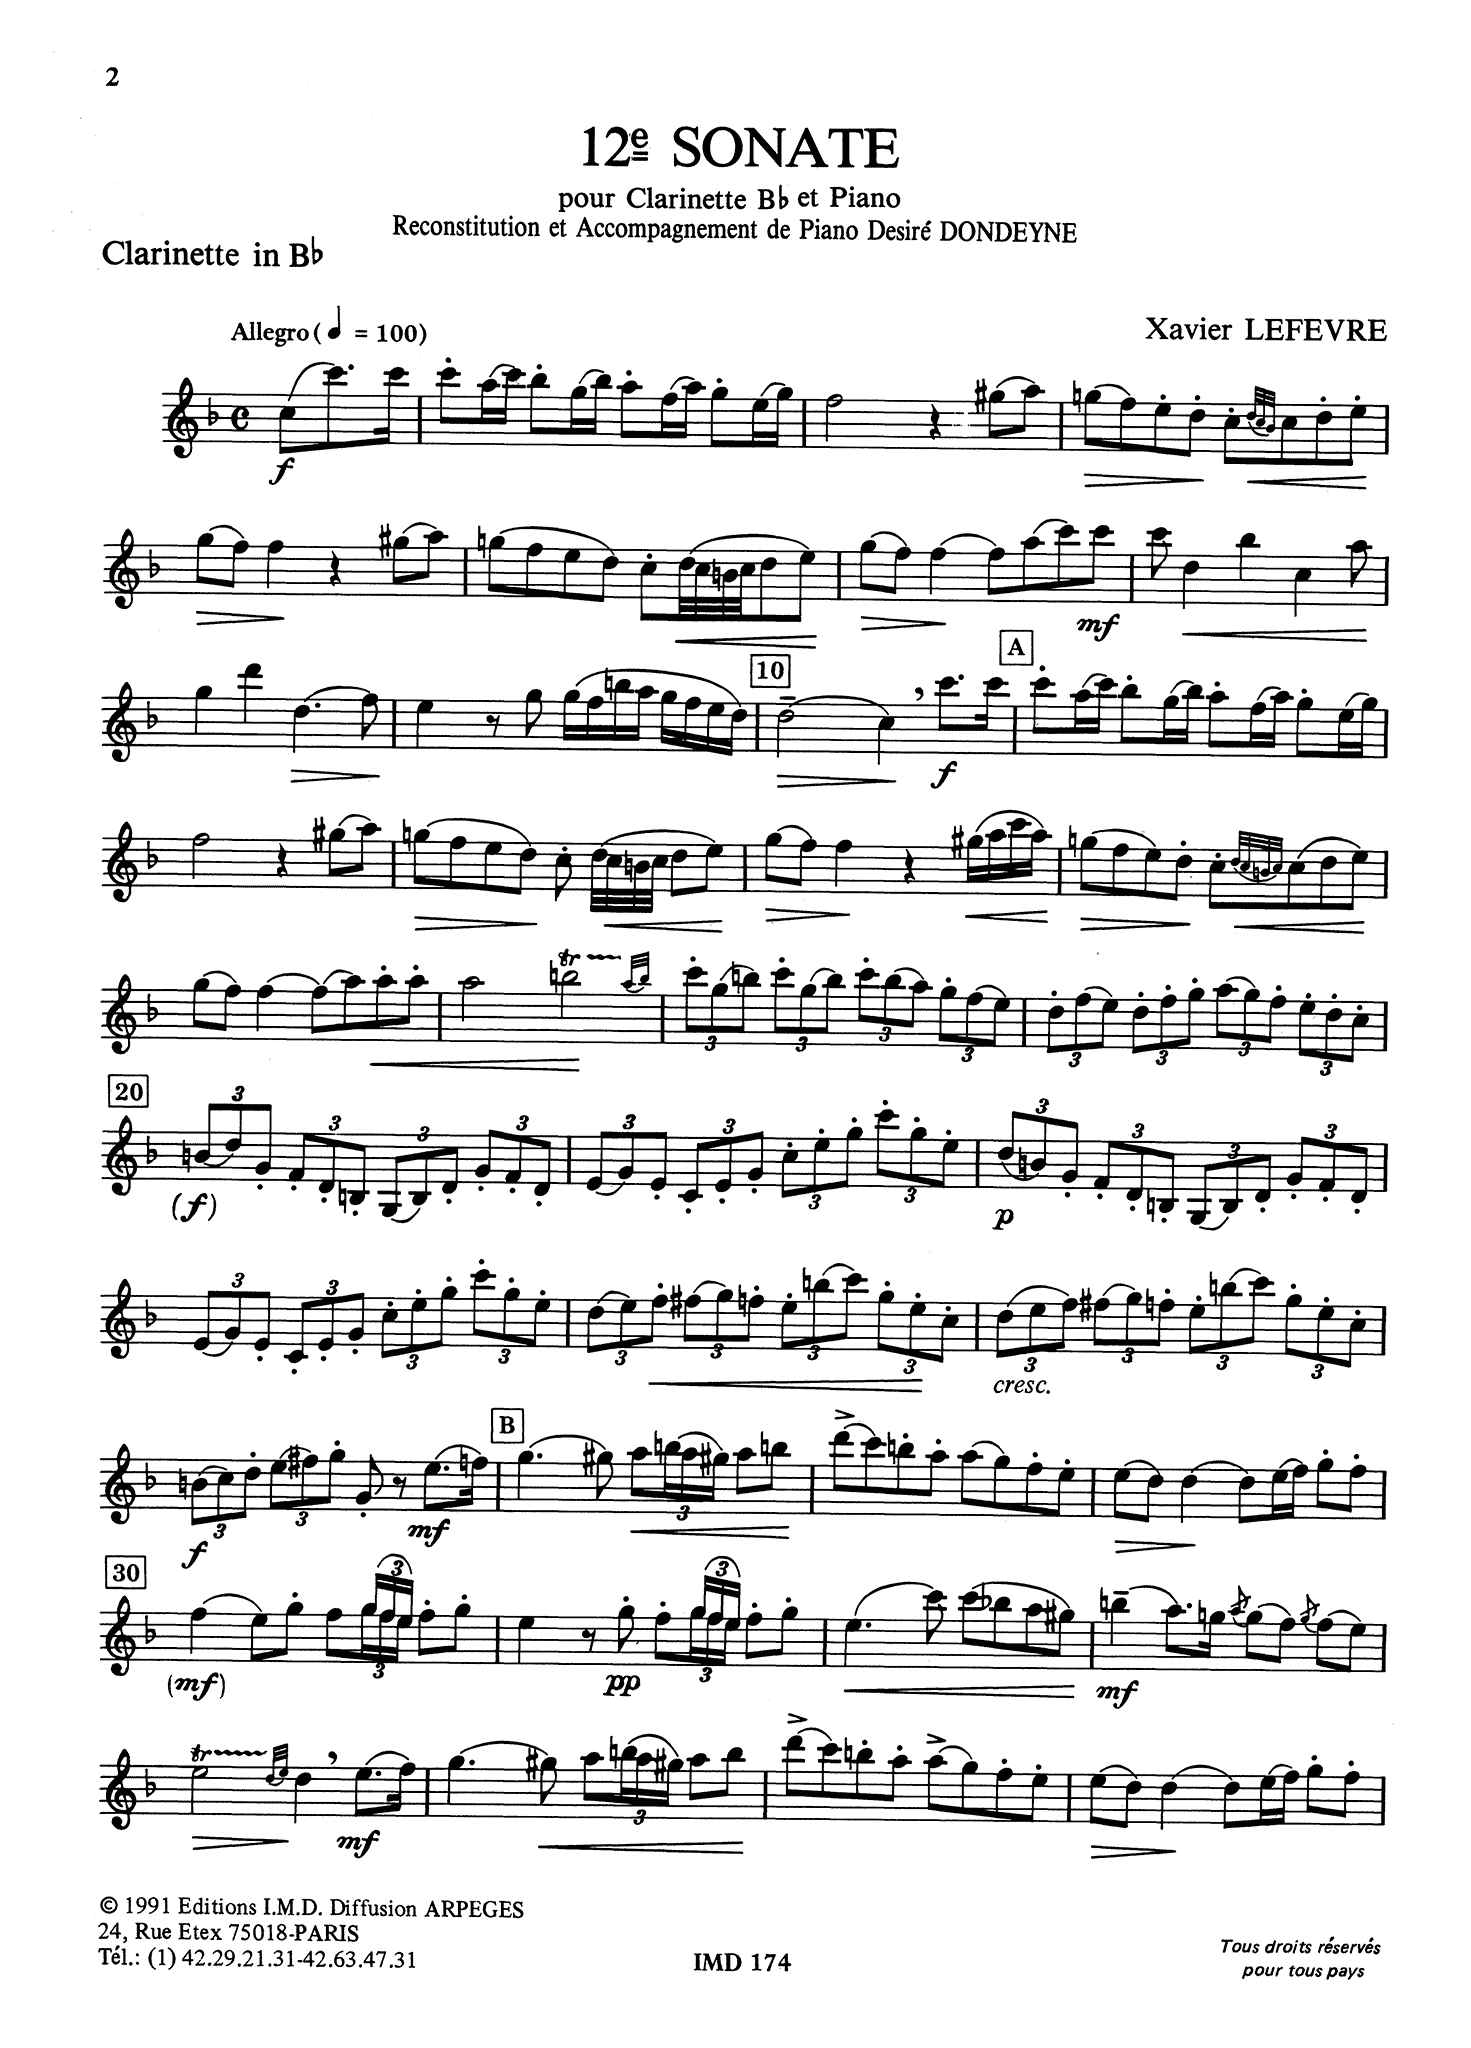 Lefèvre Clarinet Sonata No. 12 in F Major Clarinet part